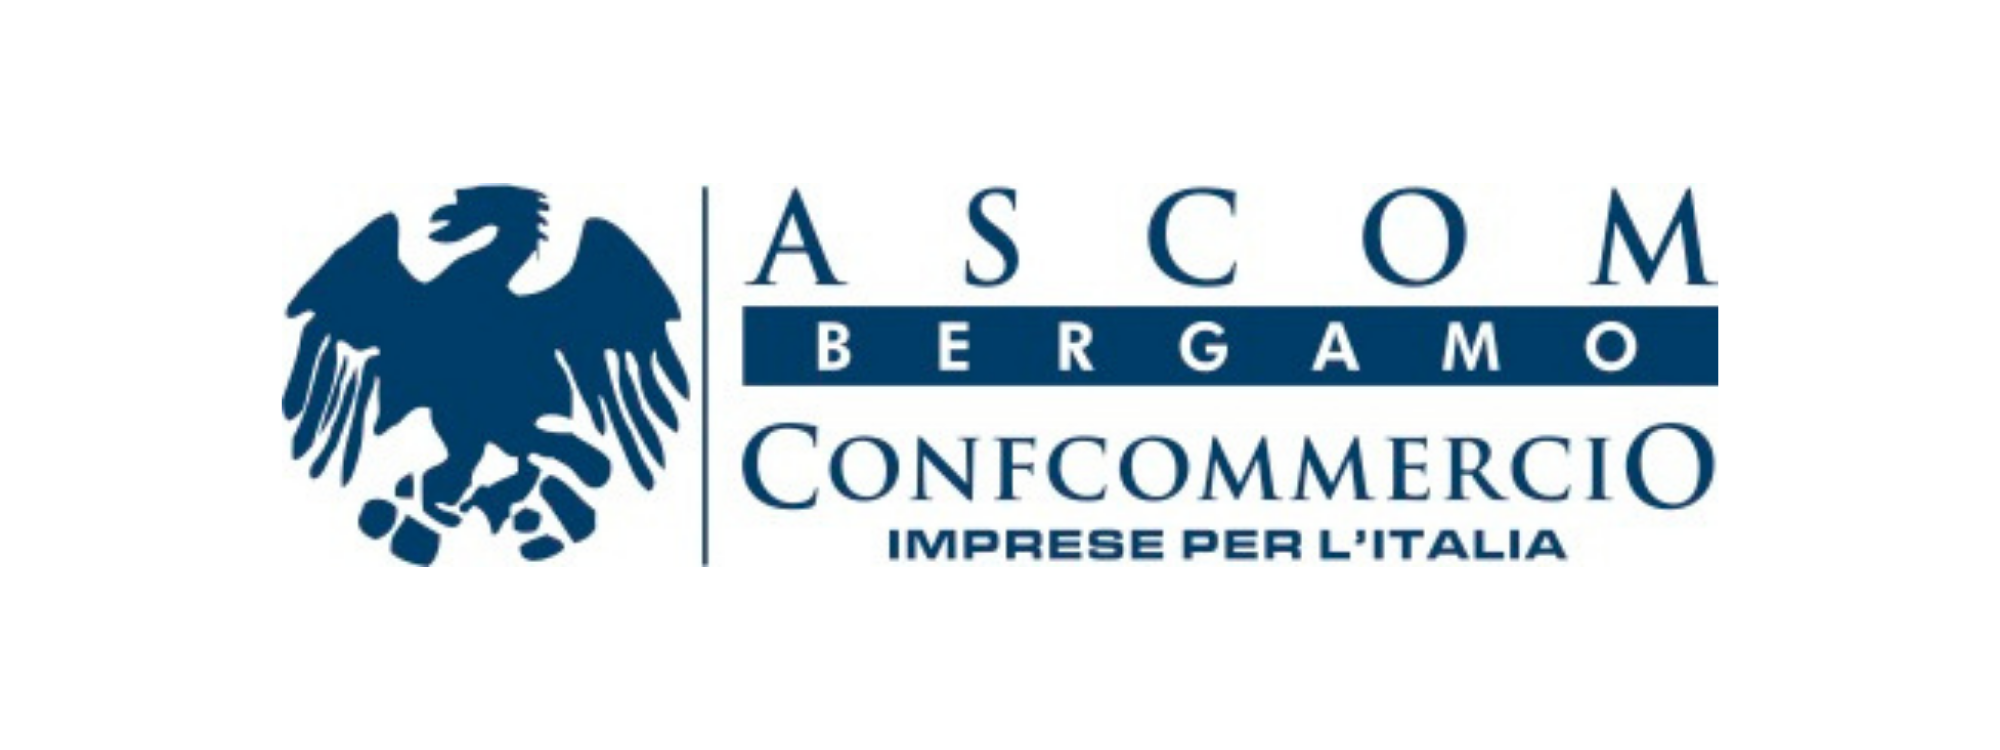 Confcommercio Bergamo